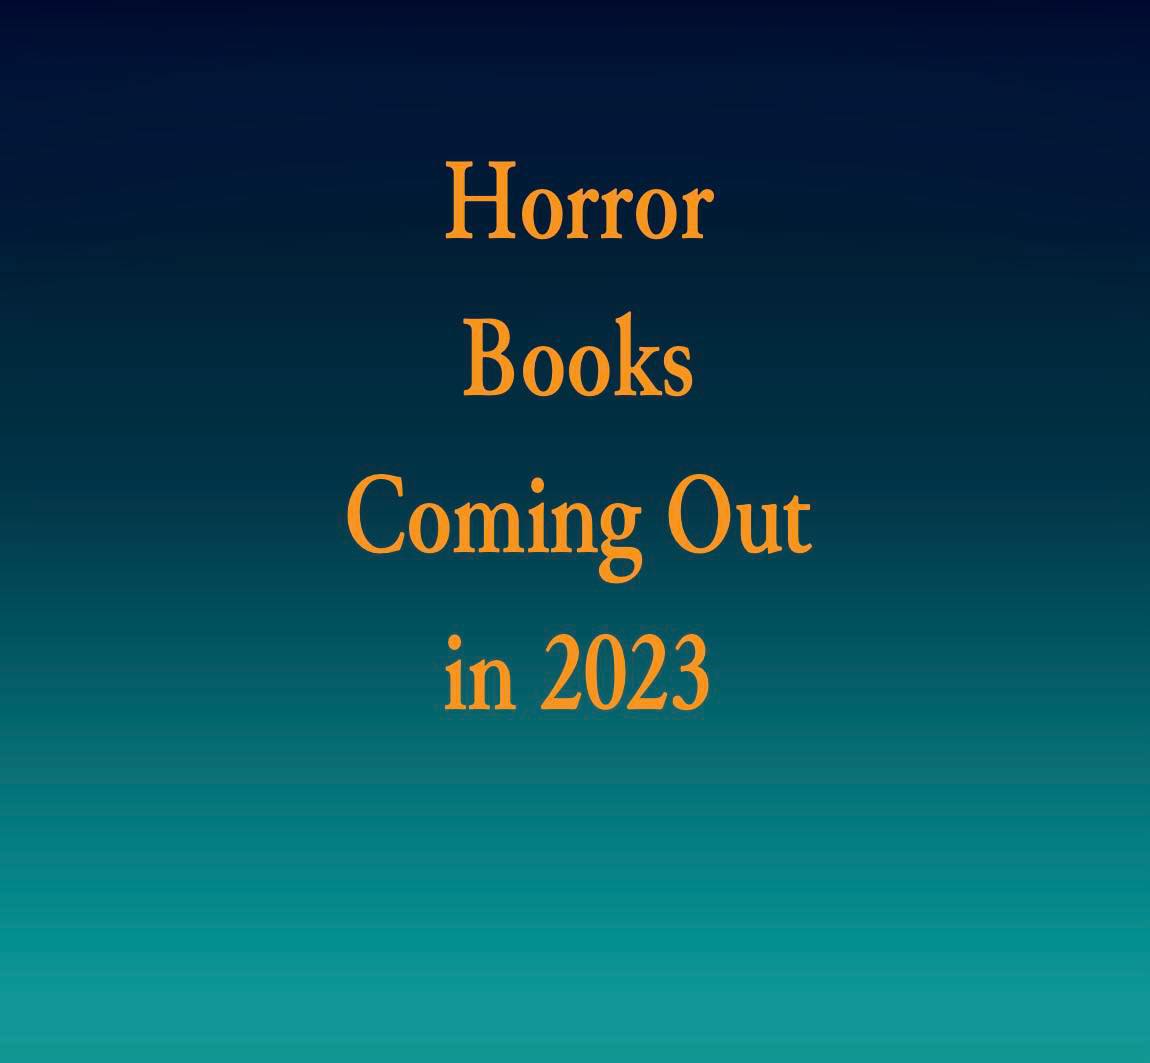 Horror Books Coming Out in 2023
readersenjoyauthorsdreams.com/2023/01/horror…
#releaseradar #bookblogger #newbooks #scarybooks #horrorbookslove #horrorfan #horrorcommunity #horrorstories #horrorfiction #horroraddict